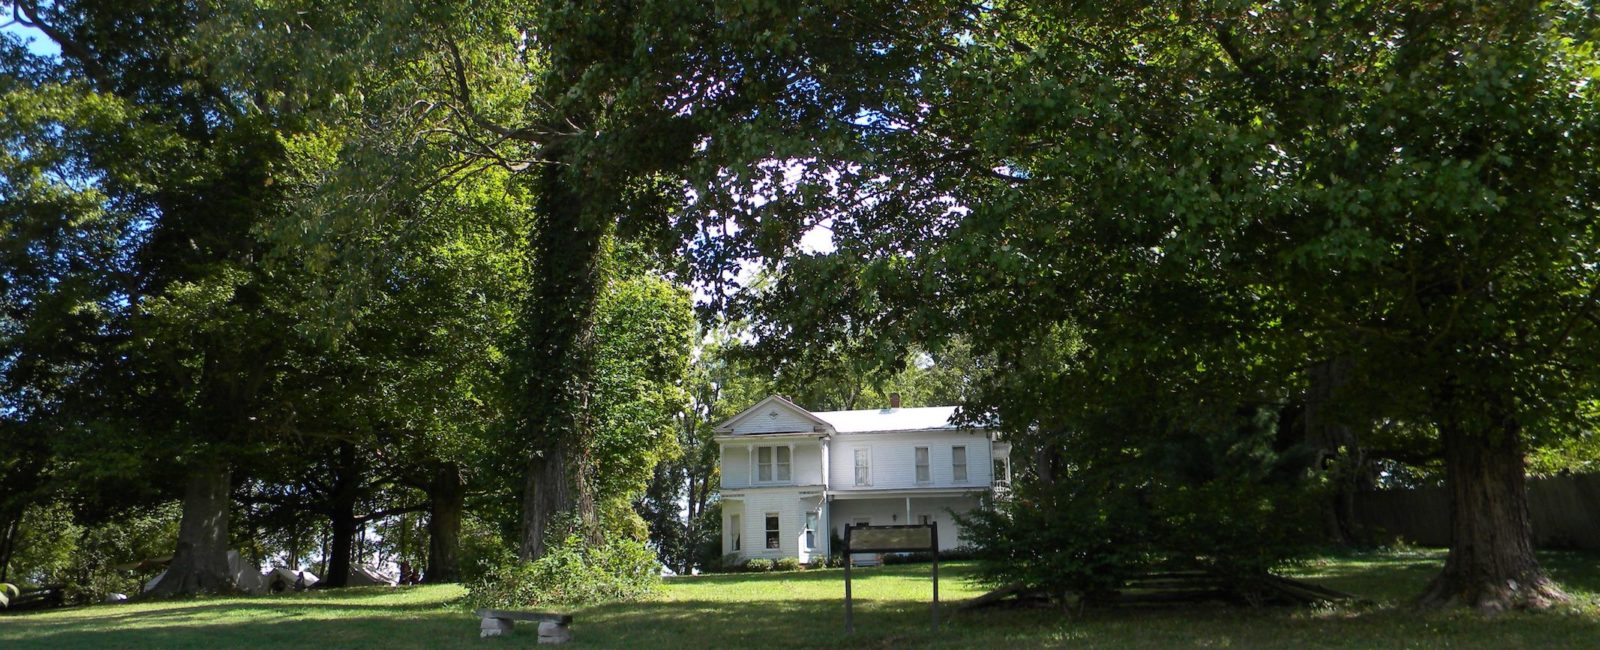 Anthony Woodson House, pre-civil war